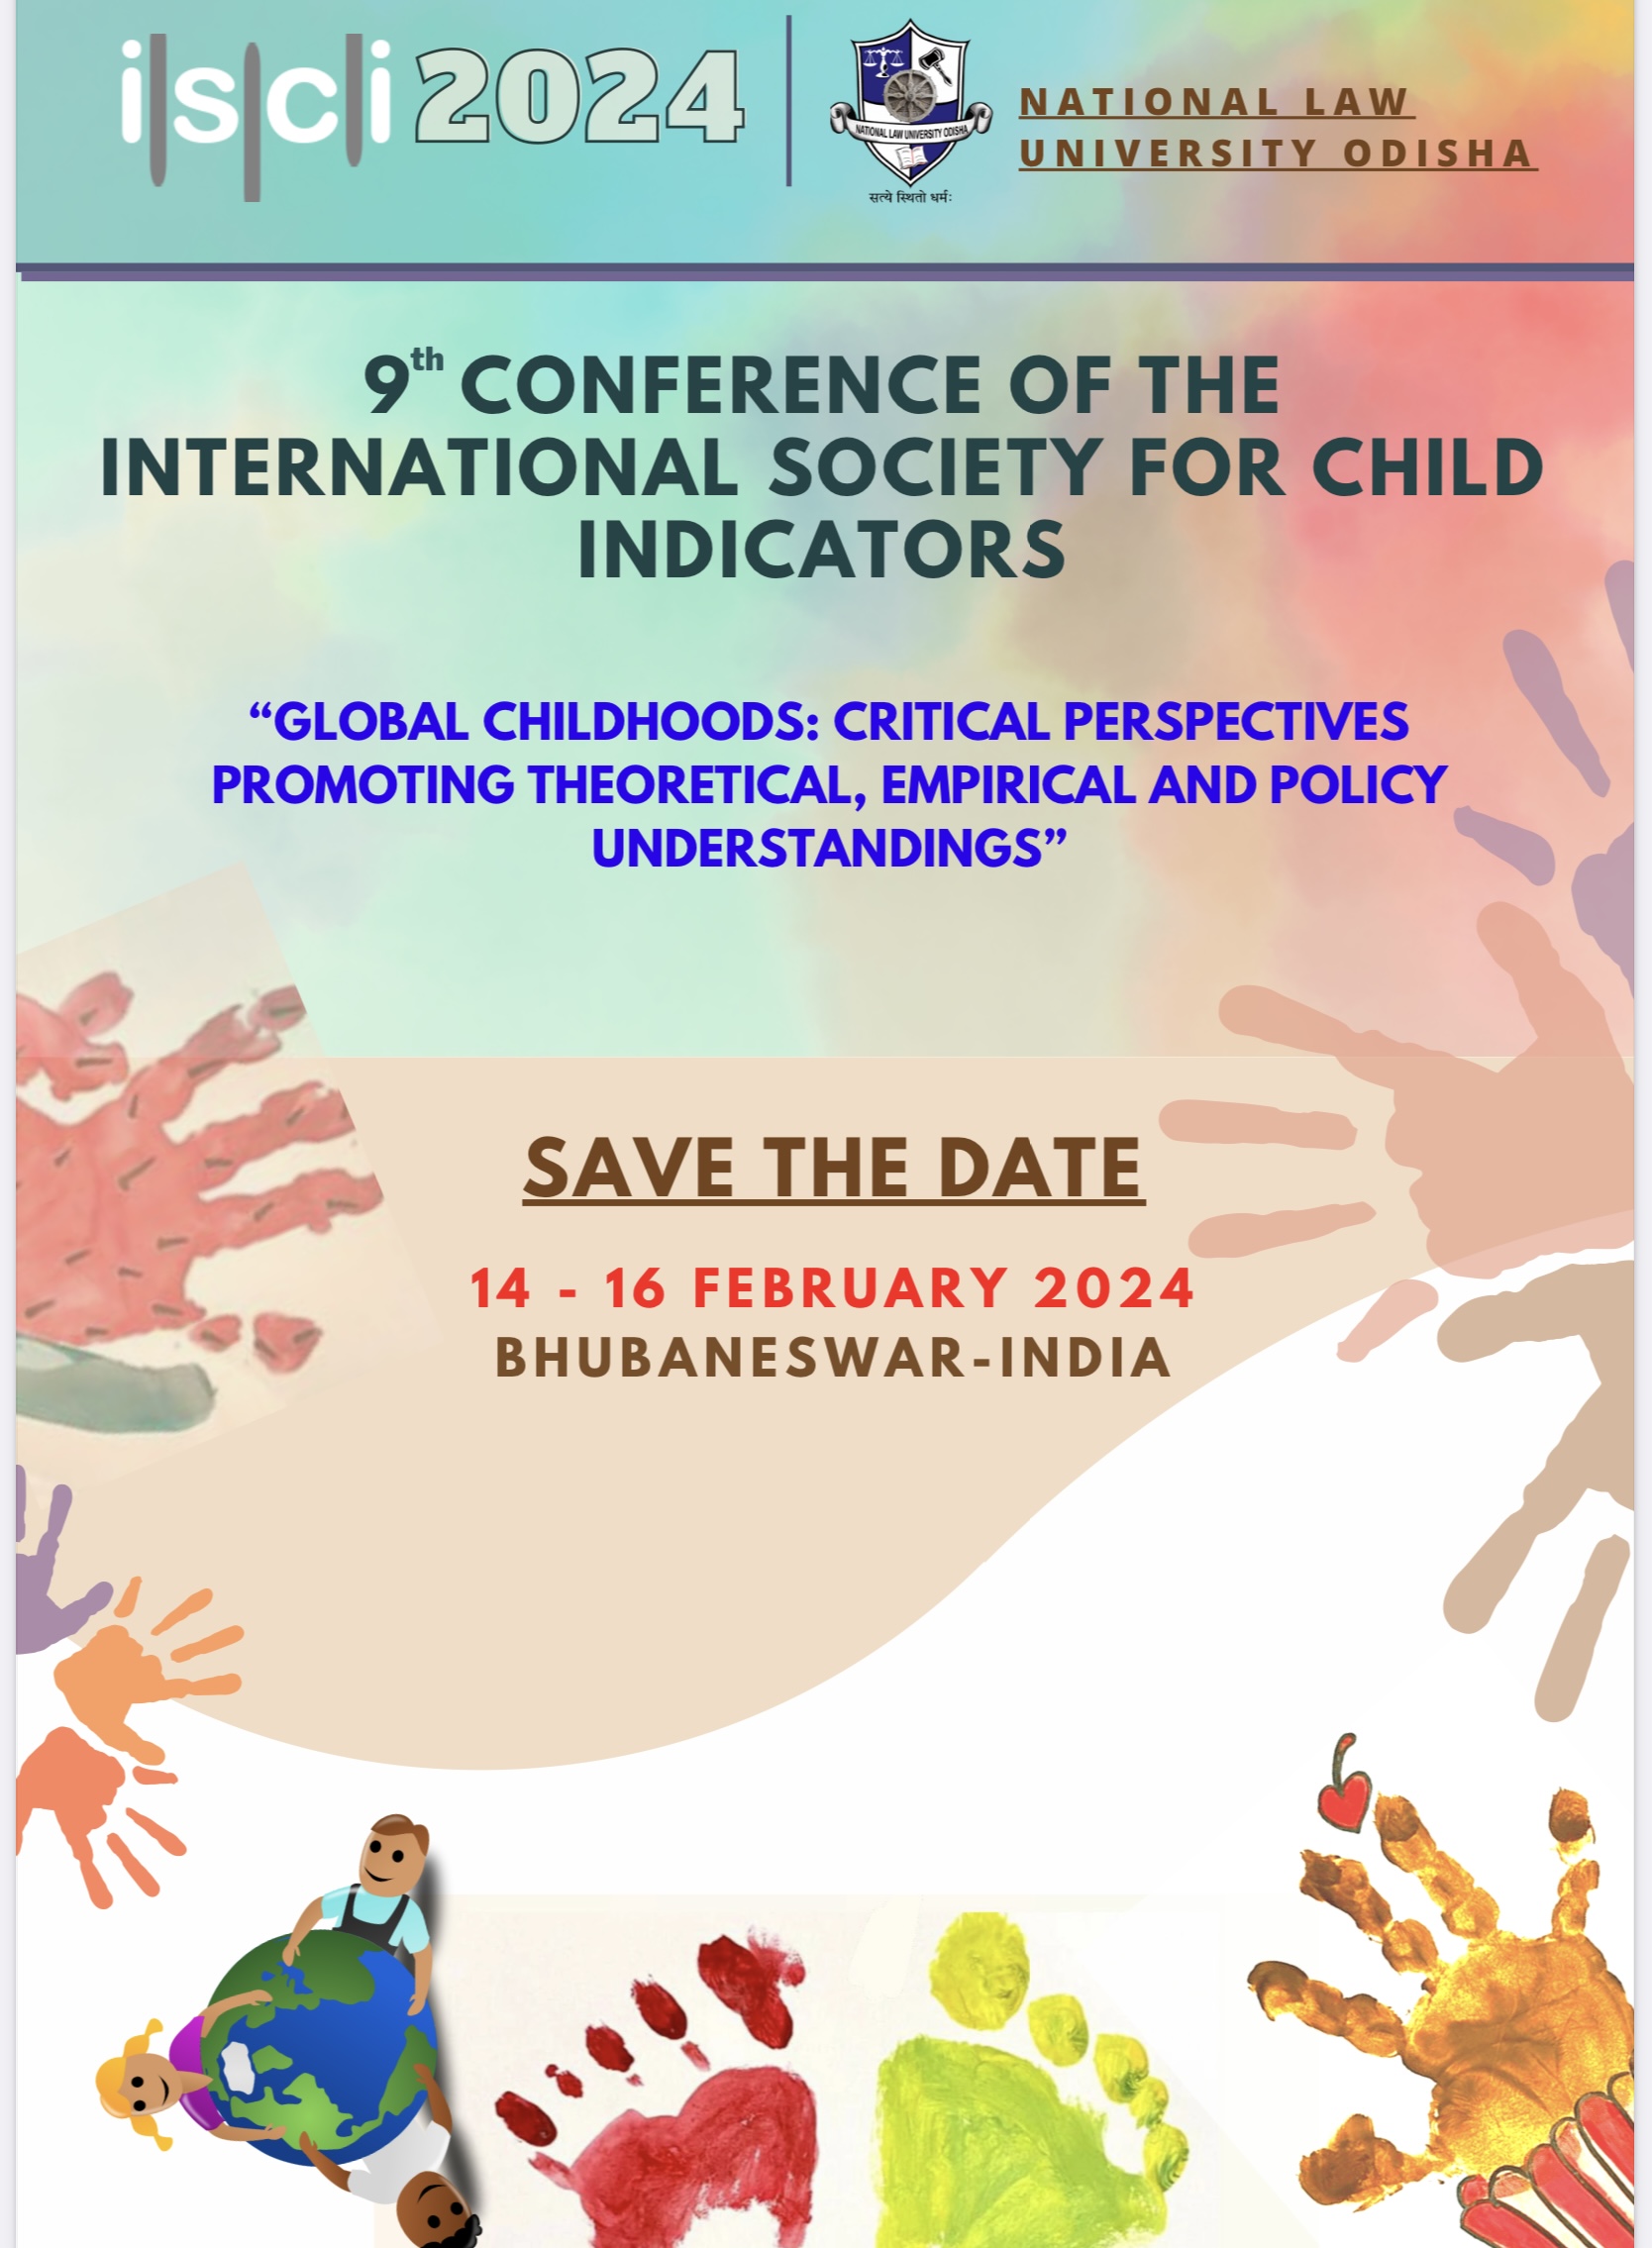 9th Conference of the International Society for Child Indicators:(14 – 16 February 2024) BHUBANESHWAR-INDIA: NLUO